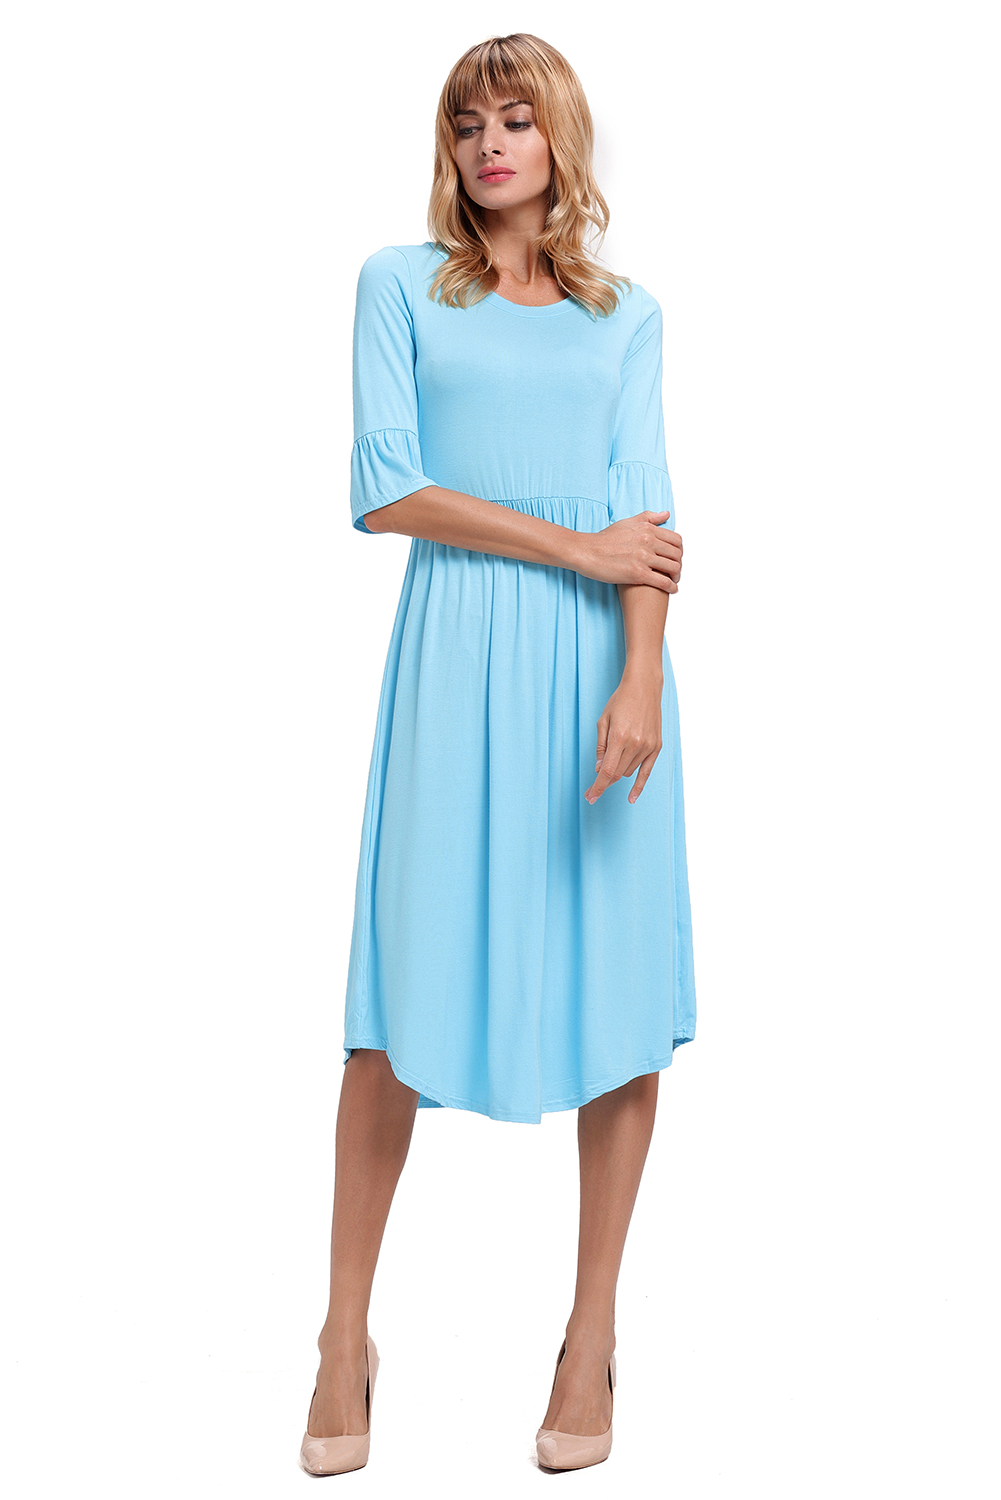 BY61652-5 Blue Ruffle Sleeve Midi Jersey Dress